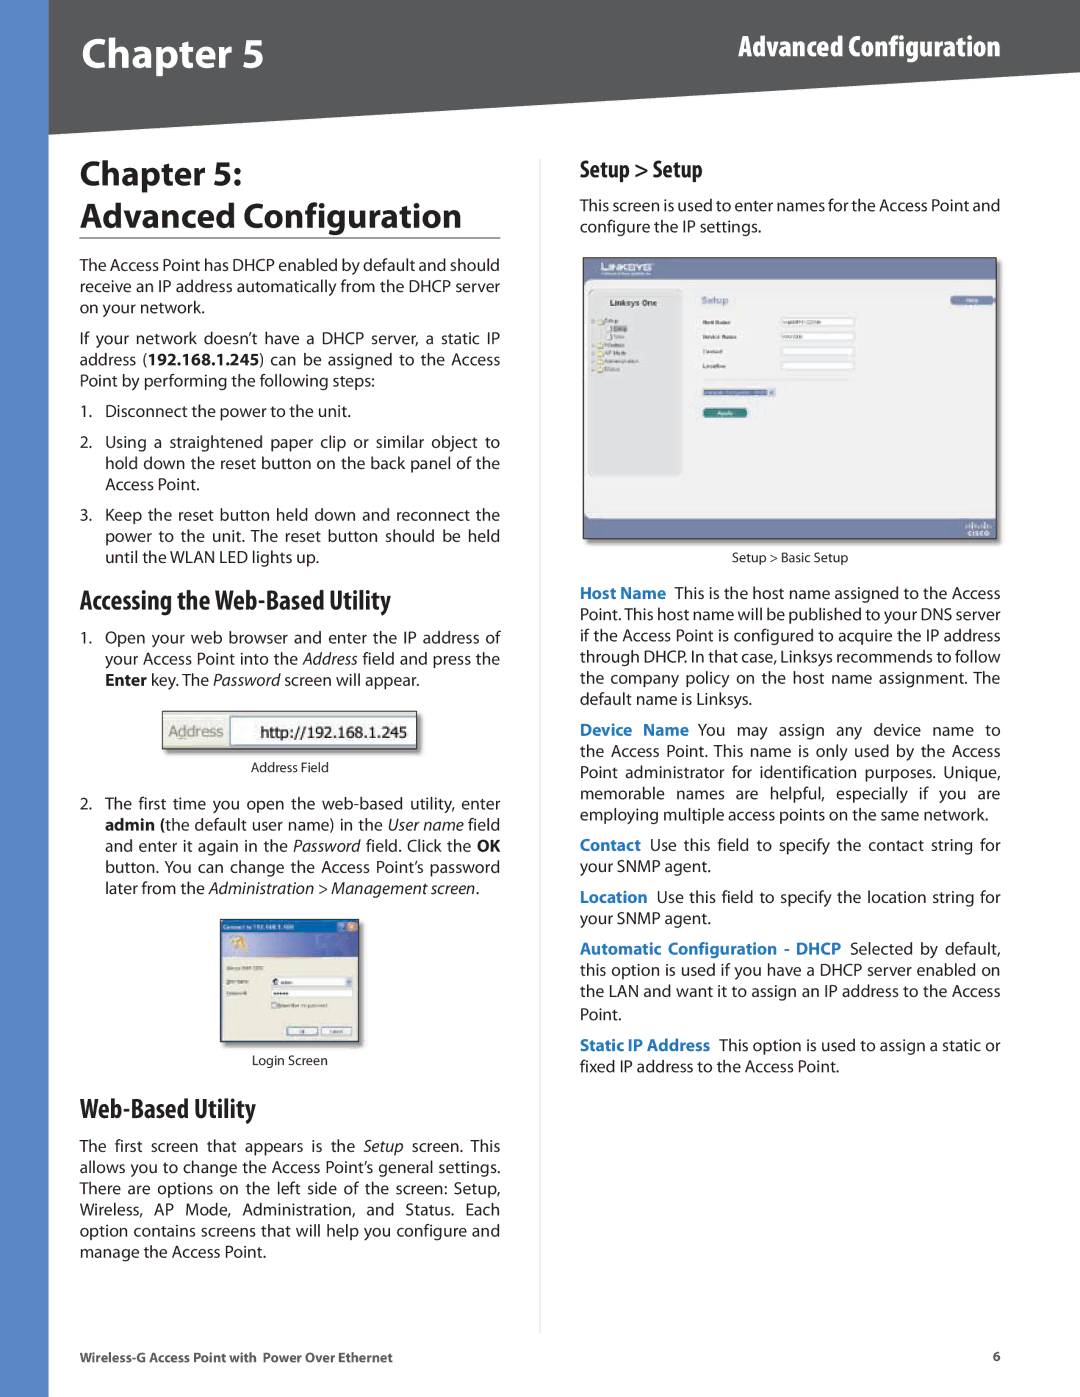 Linksys WAP2000 manual Chapter Advanced Configuration, Accessing the Web-Based Utility, Setup Setup 